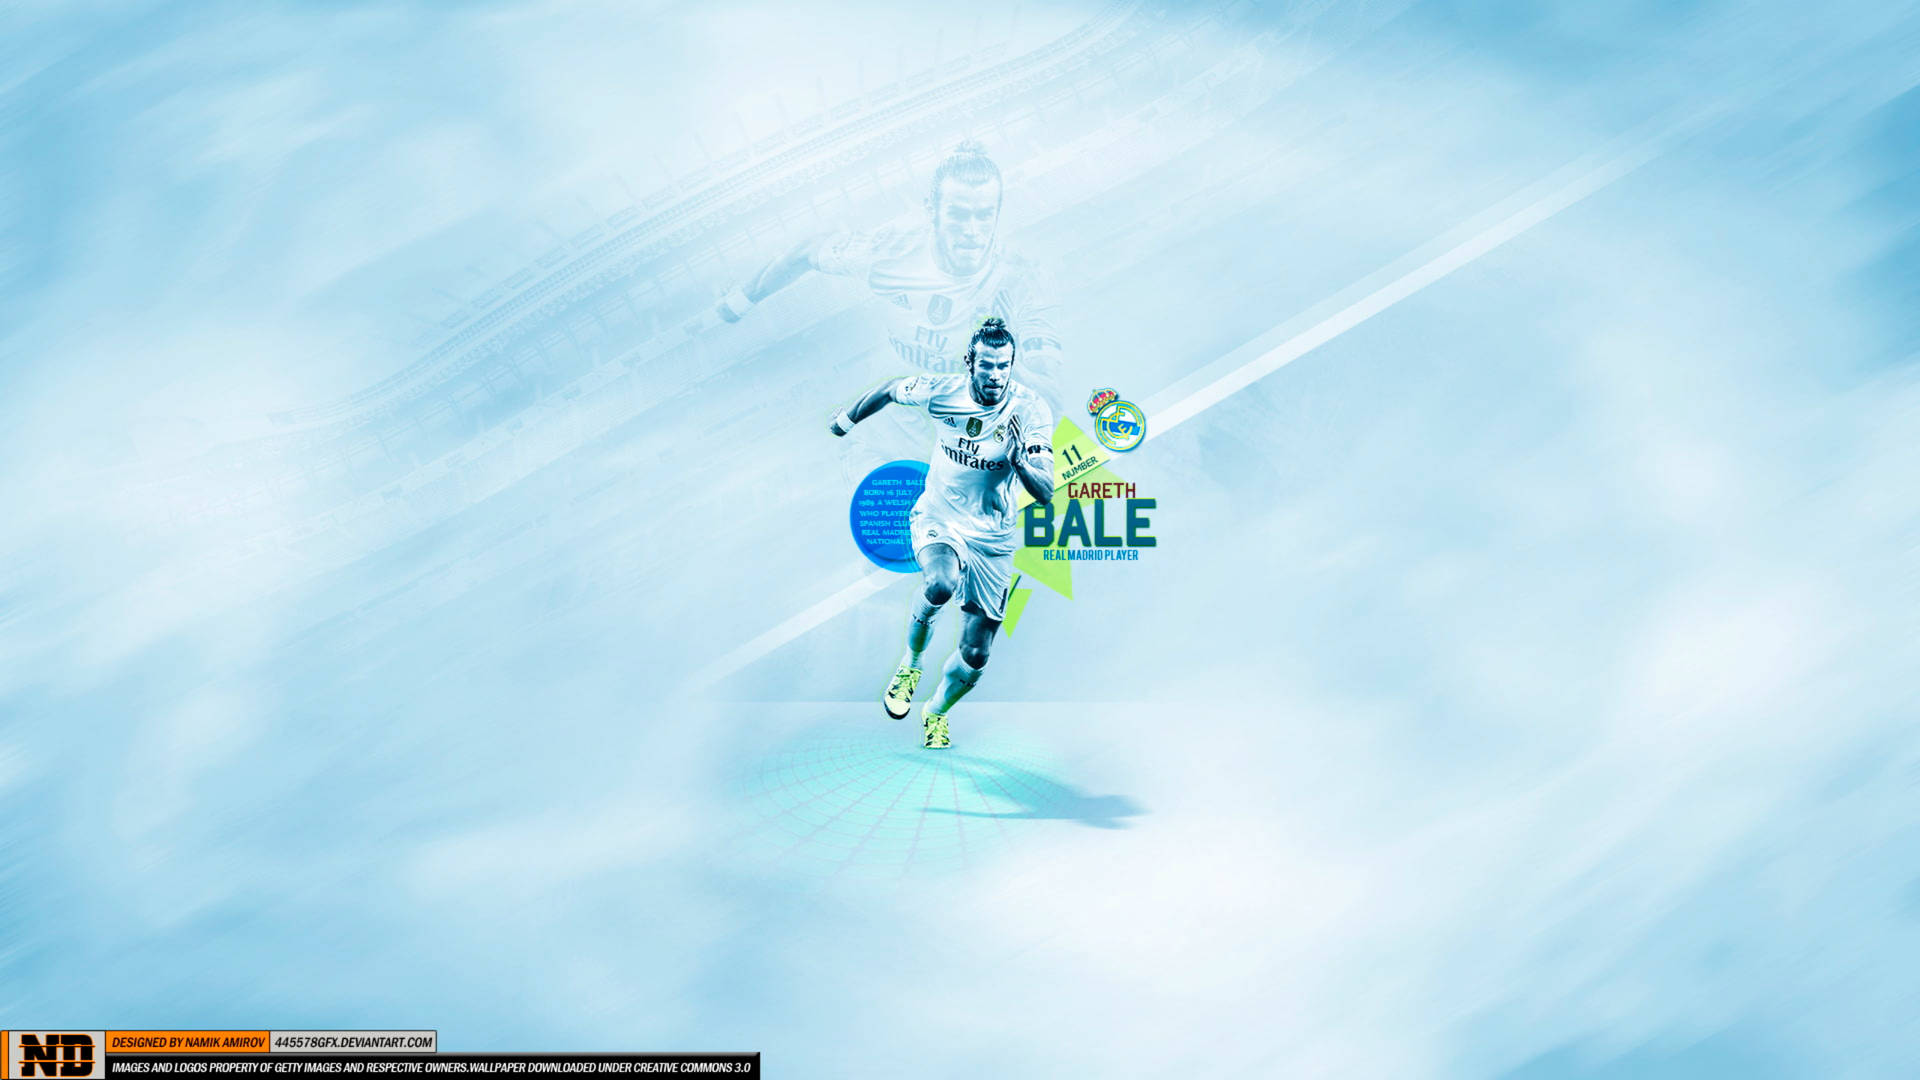 Gareth Bale In Digital Aesthetic Background